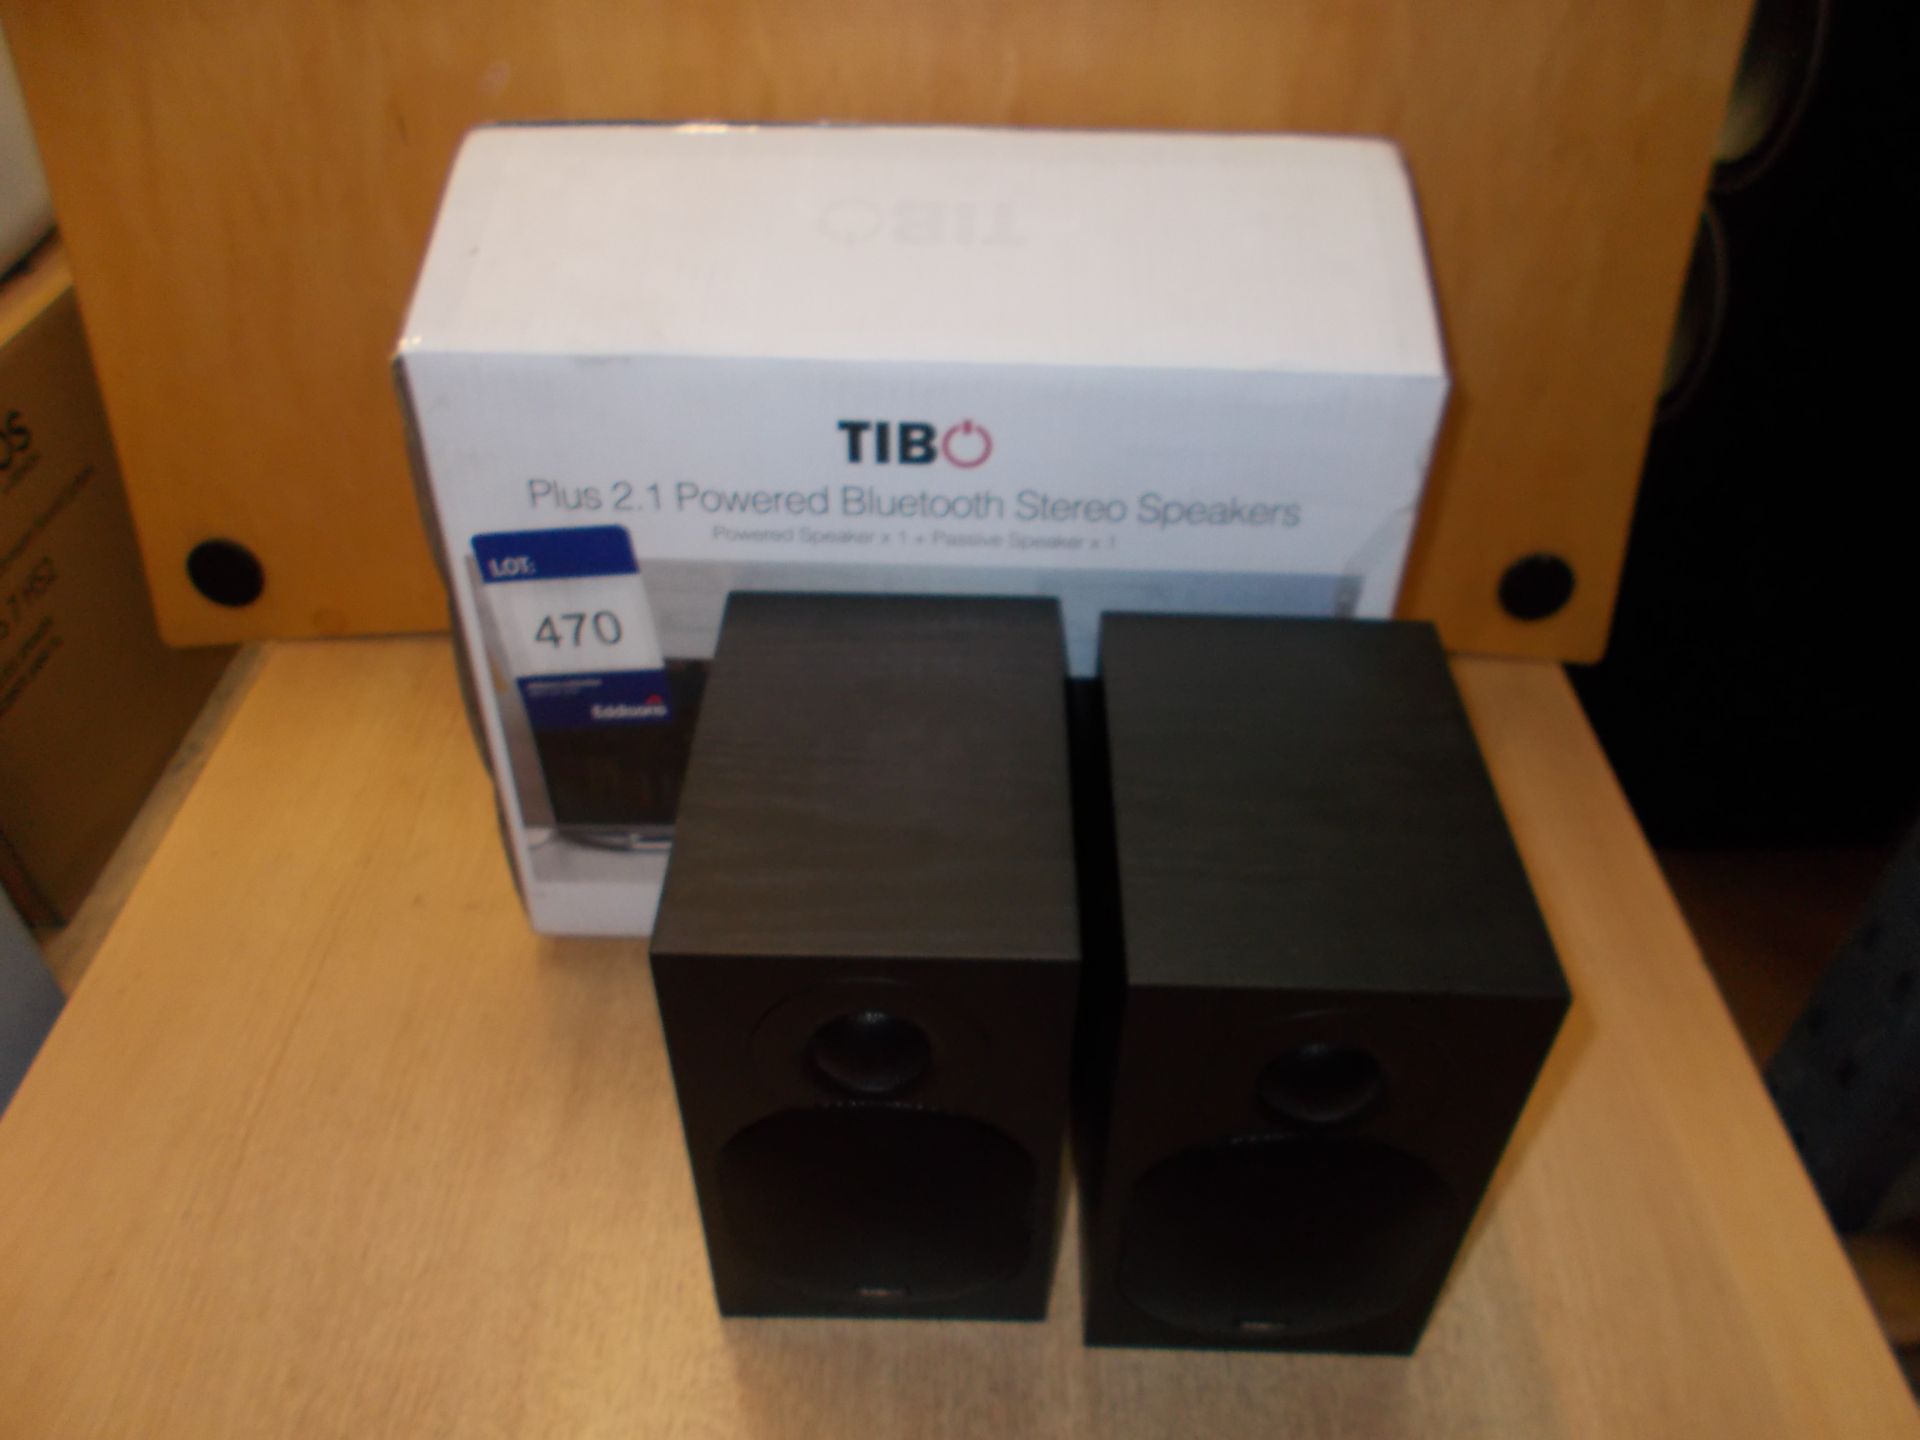 Pair of Tibo Plus 2.1 Powered Blue Tooth Stereo Speakers (on display) – RRP £167